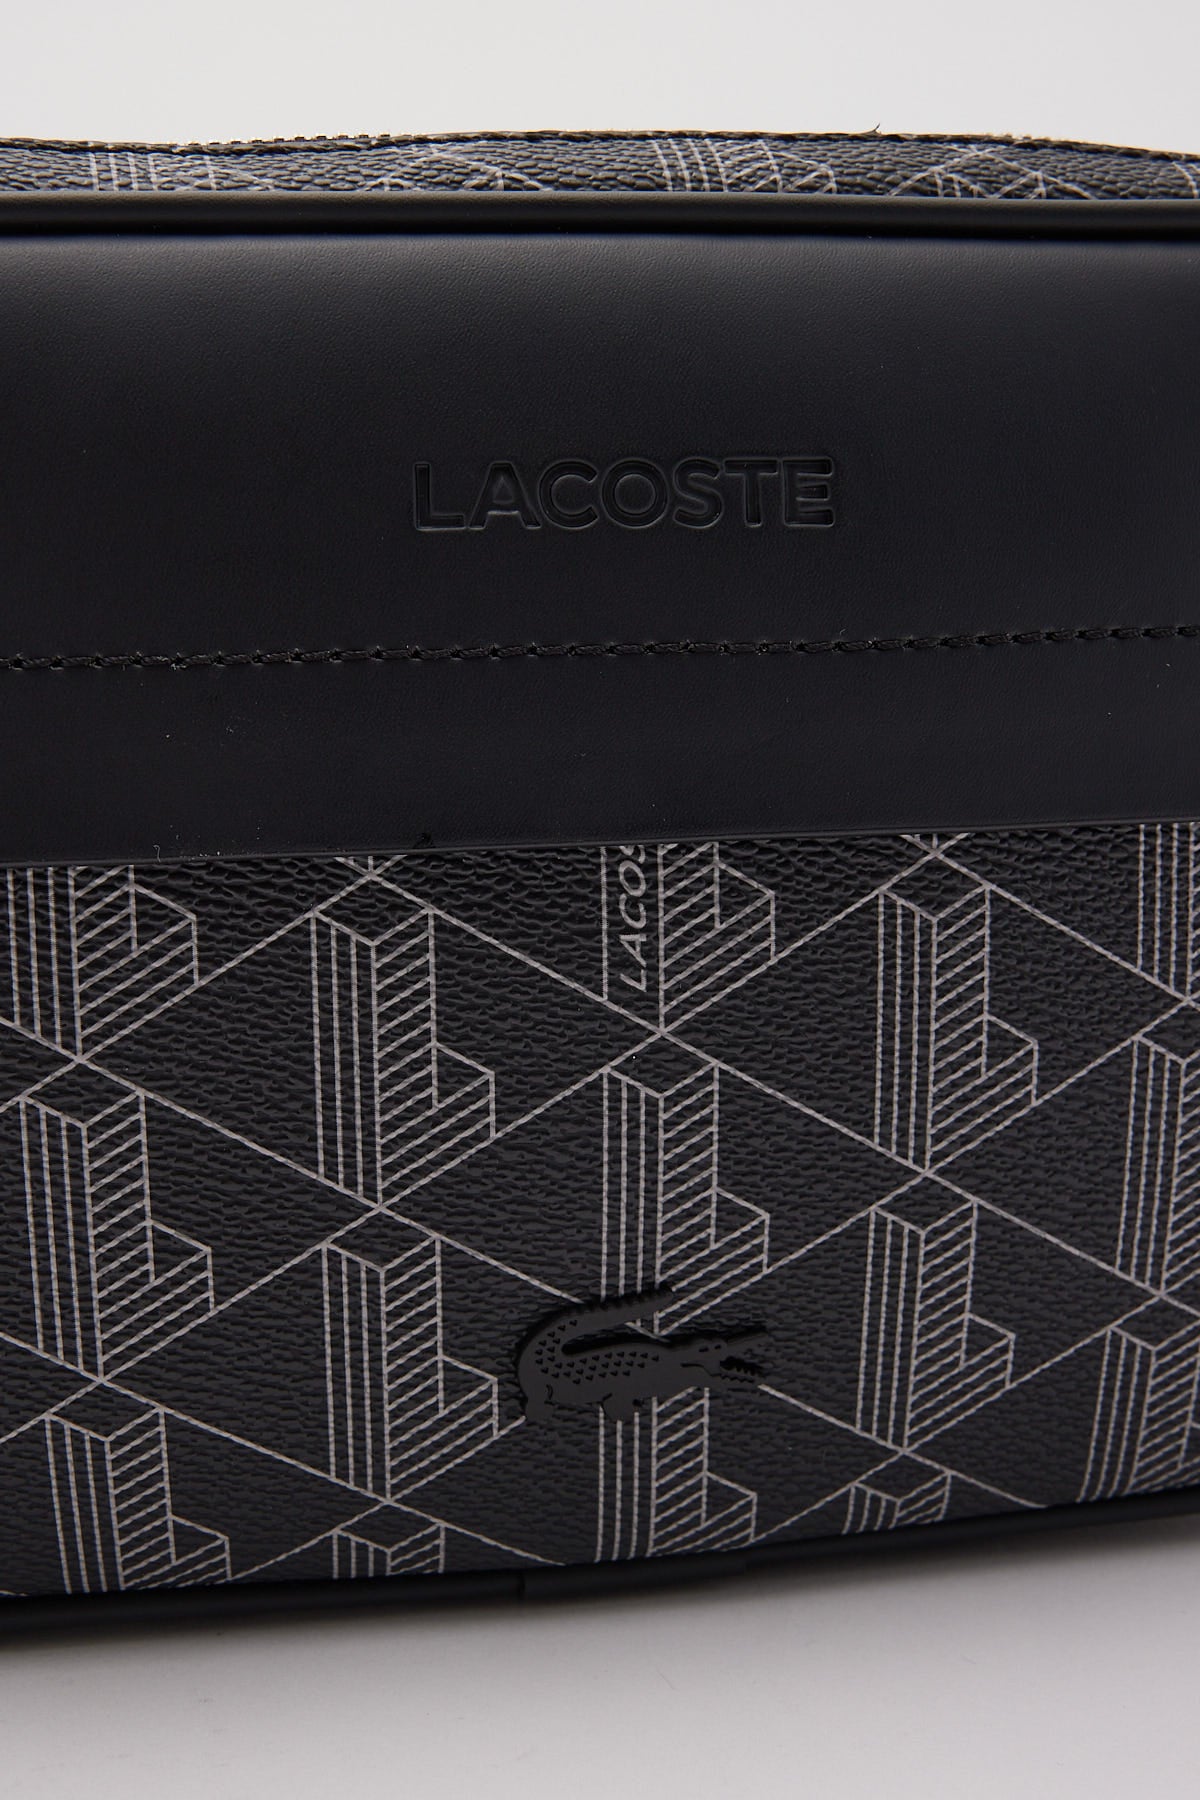 Lacoste The Blend Body Bag Monogram